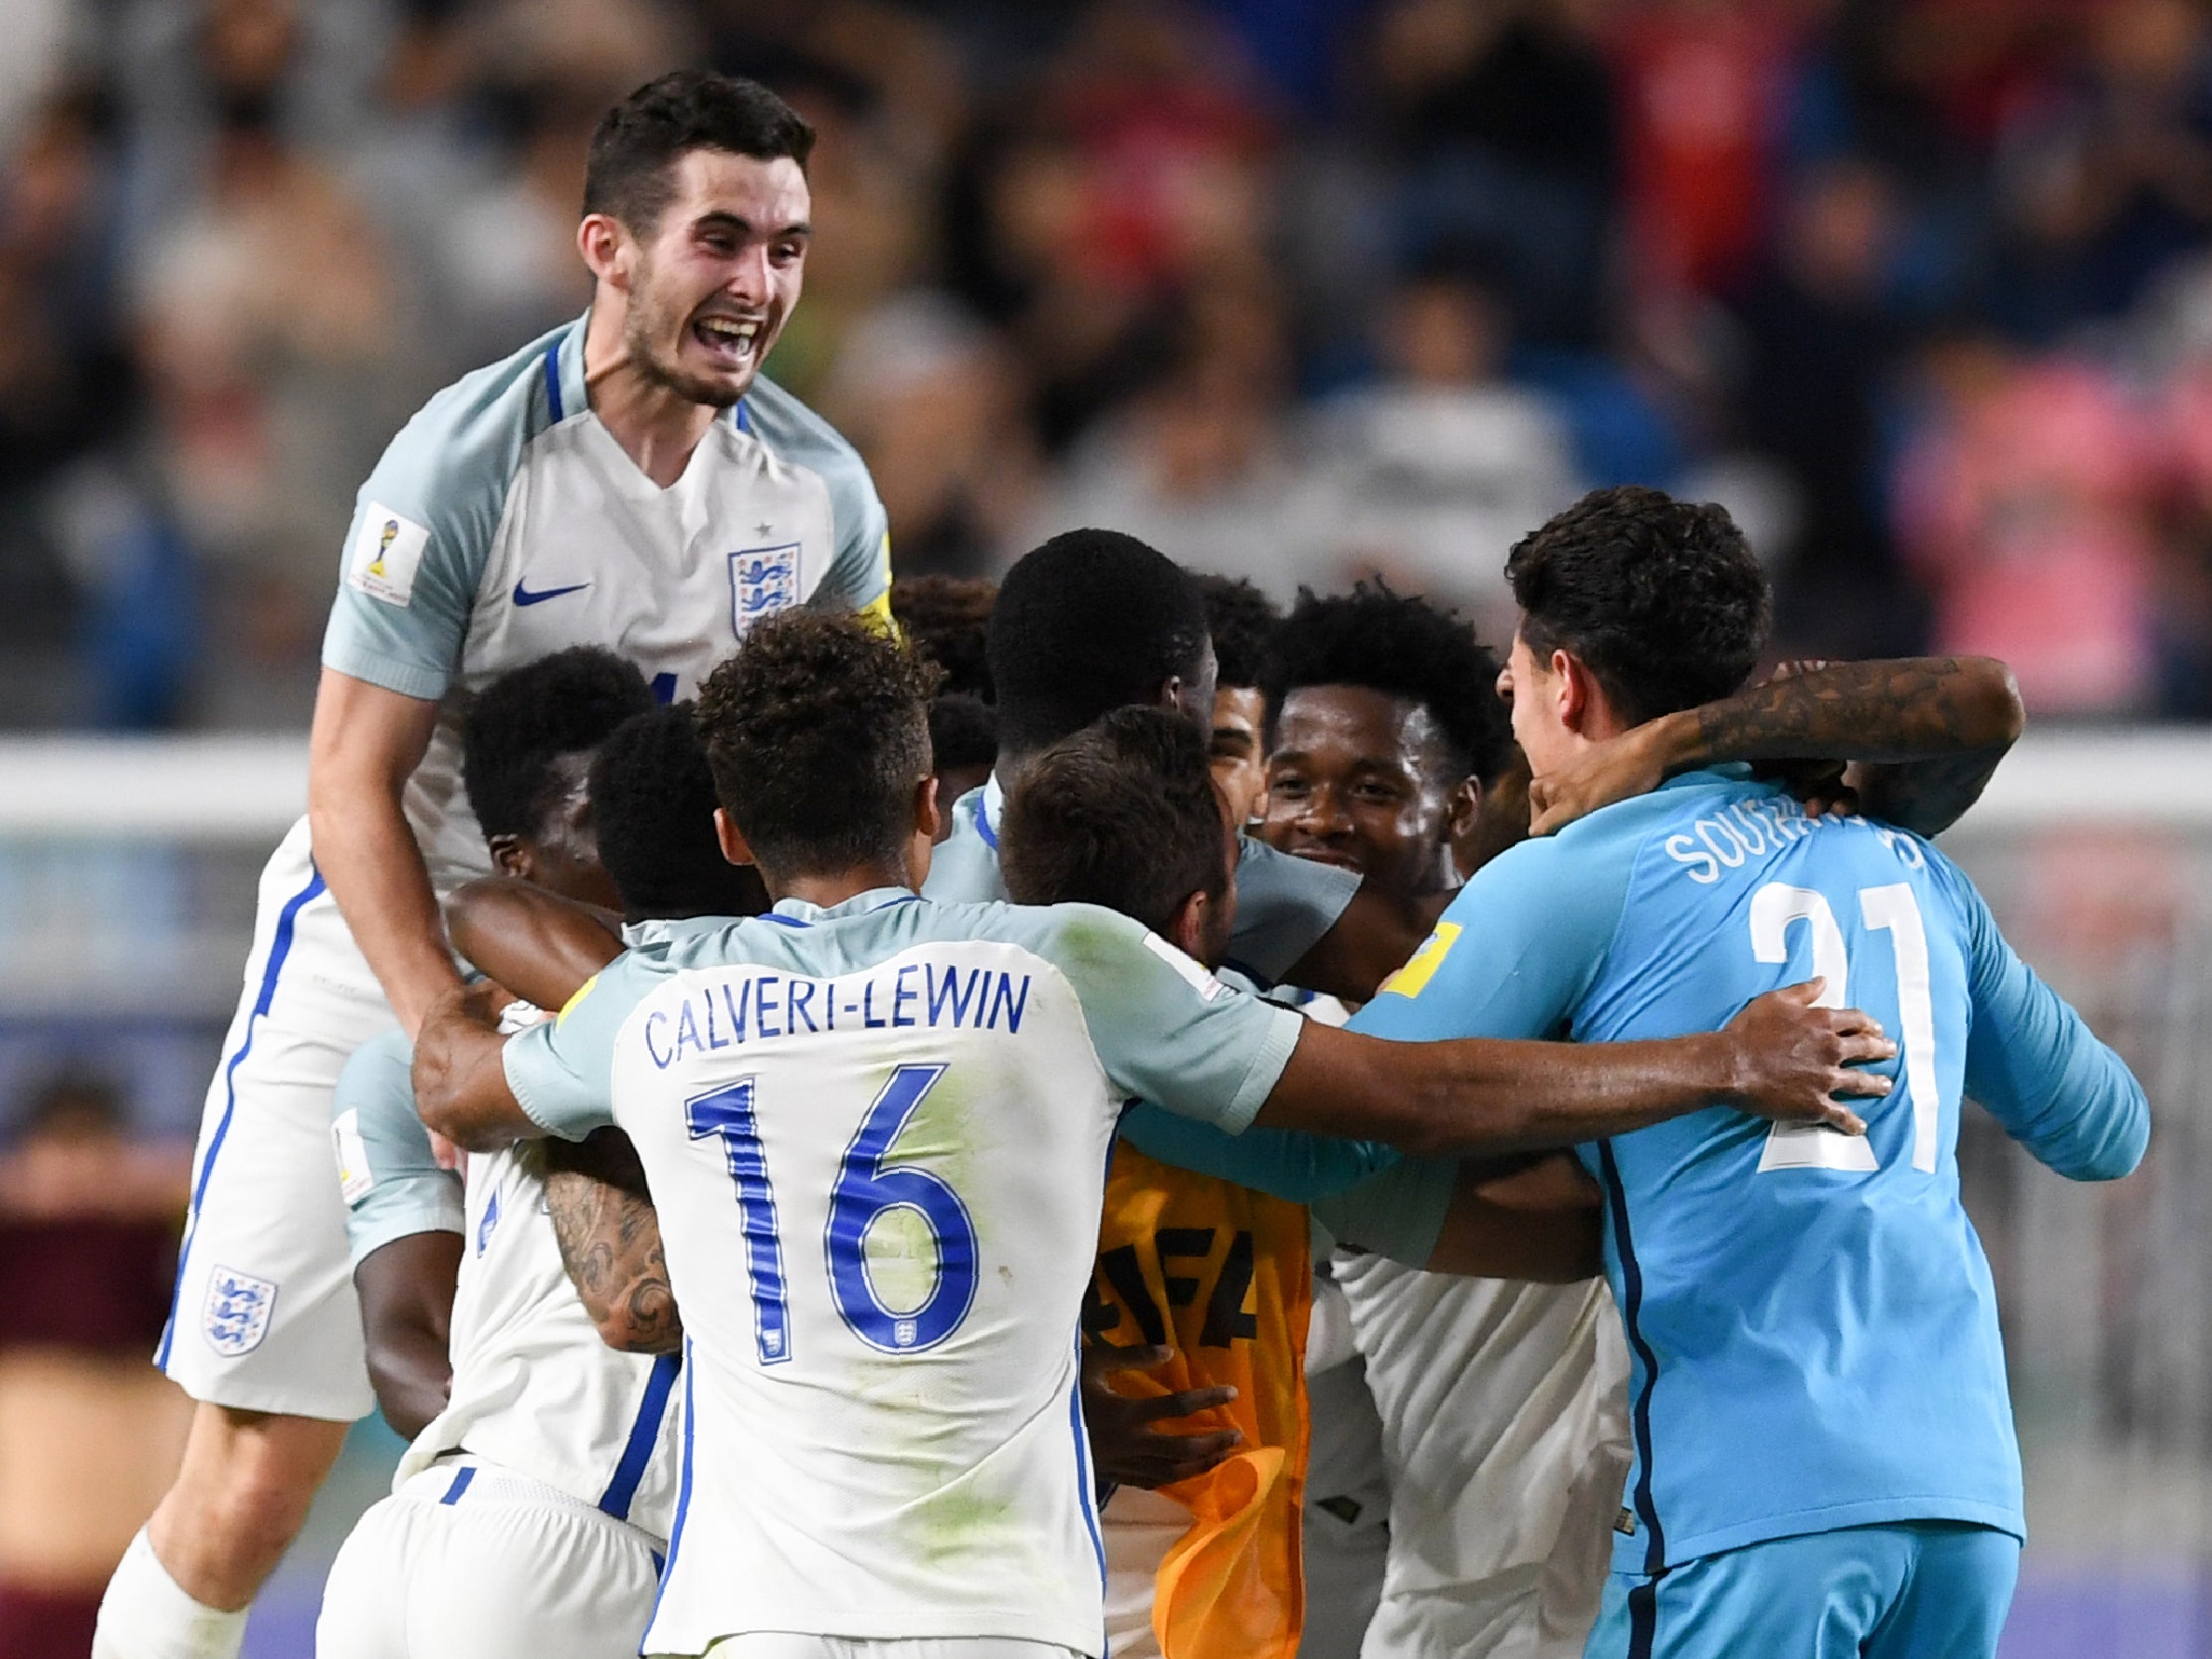 Venezuela vs England U20 World Cup final as it happened Dominic Calvert-Lewins goal wins the World Cup The Independent The Independent